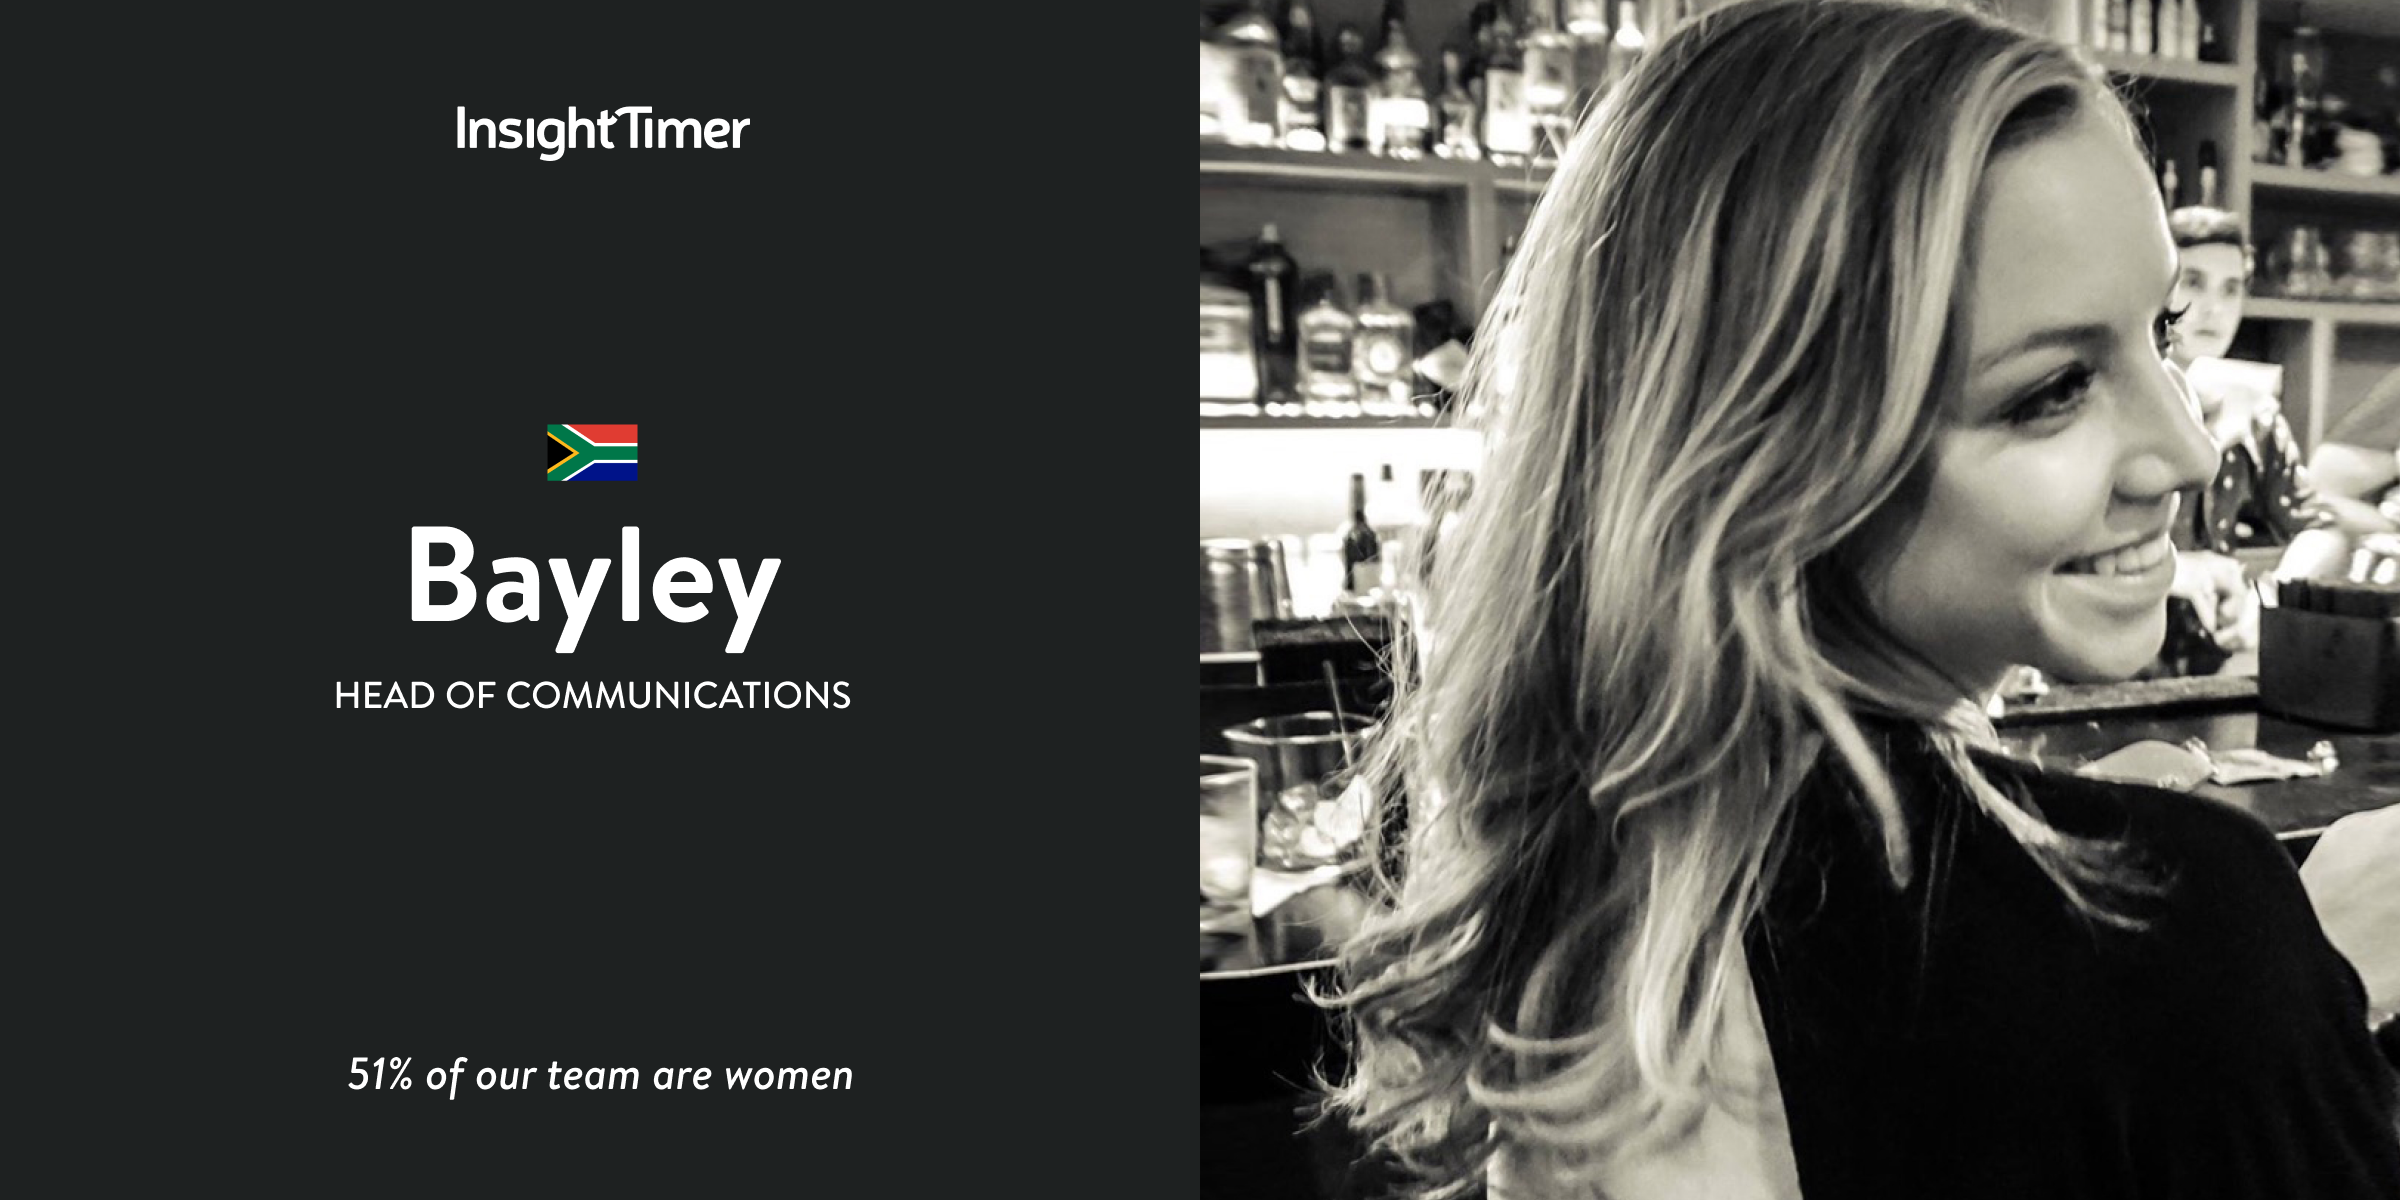 Meet Bayley – Head of Communications